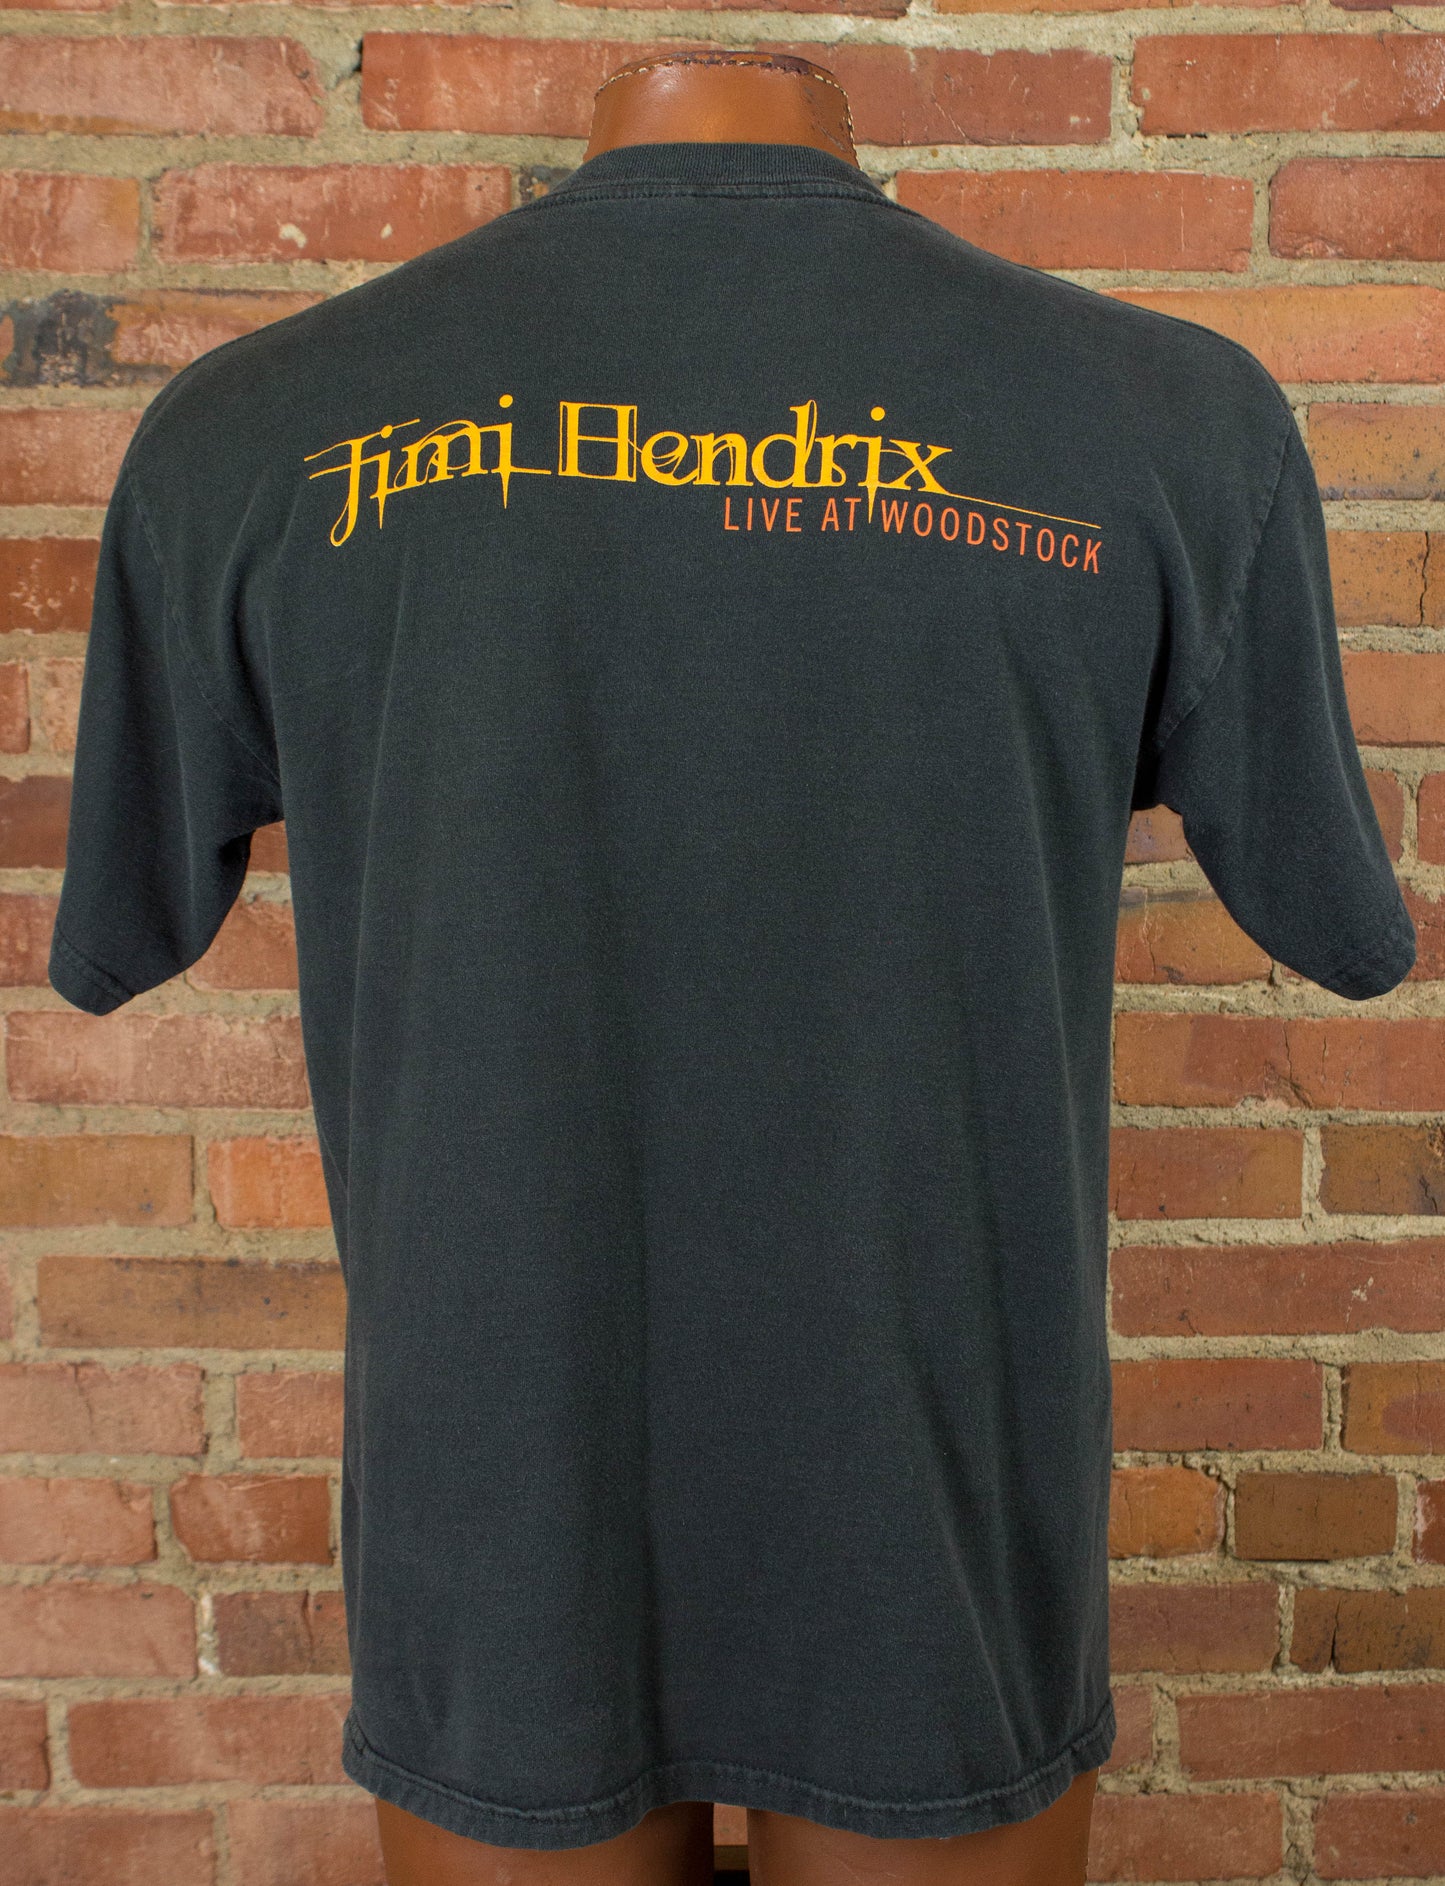 Vintage Jimi Hendrix Concert T Shirt 1999 Live At Woodstock Black Large/XL